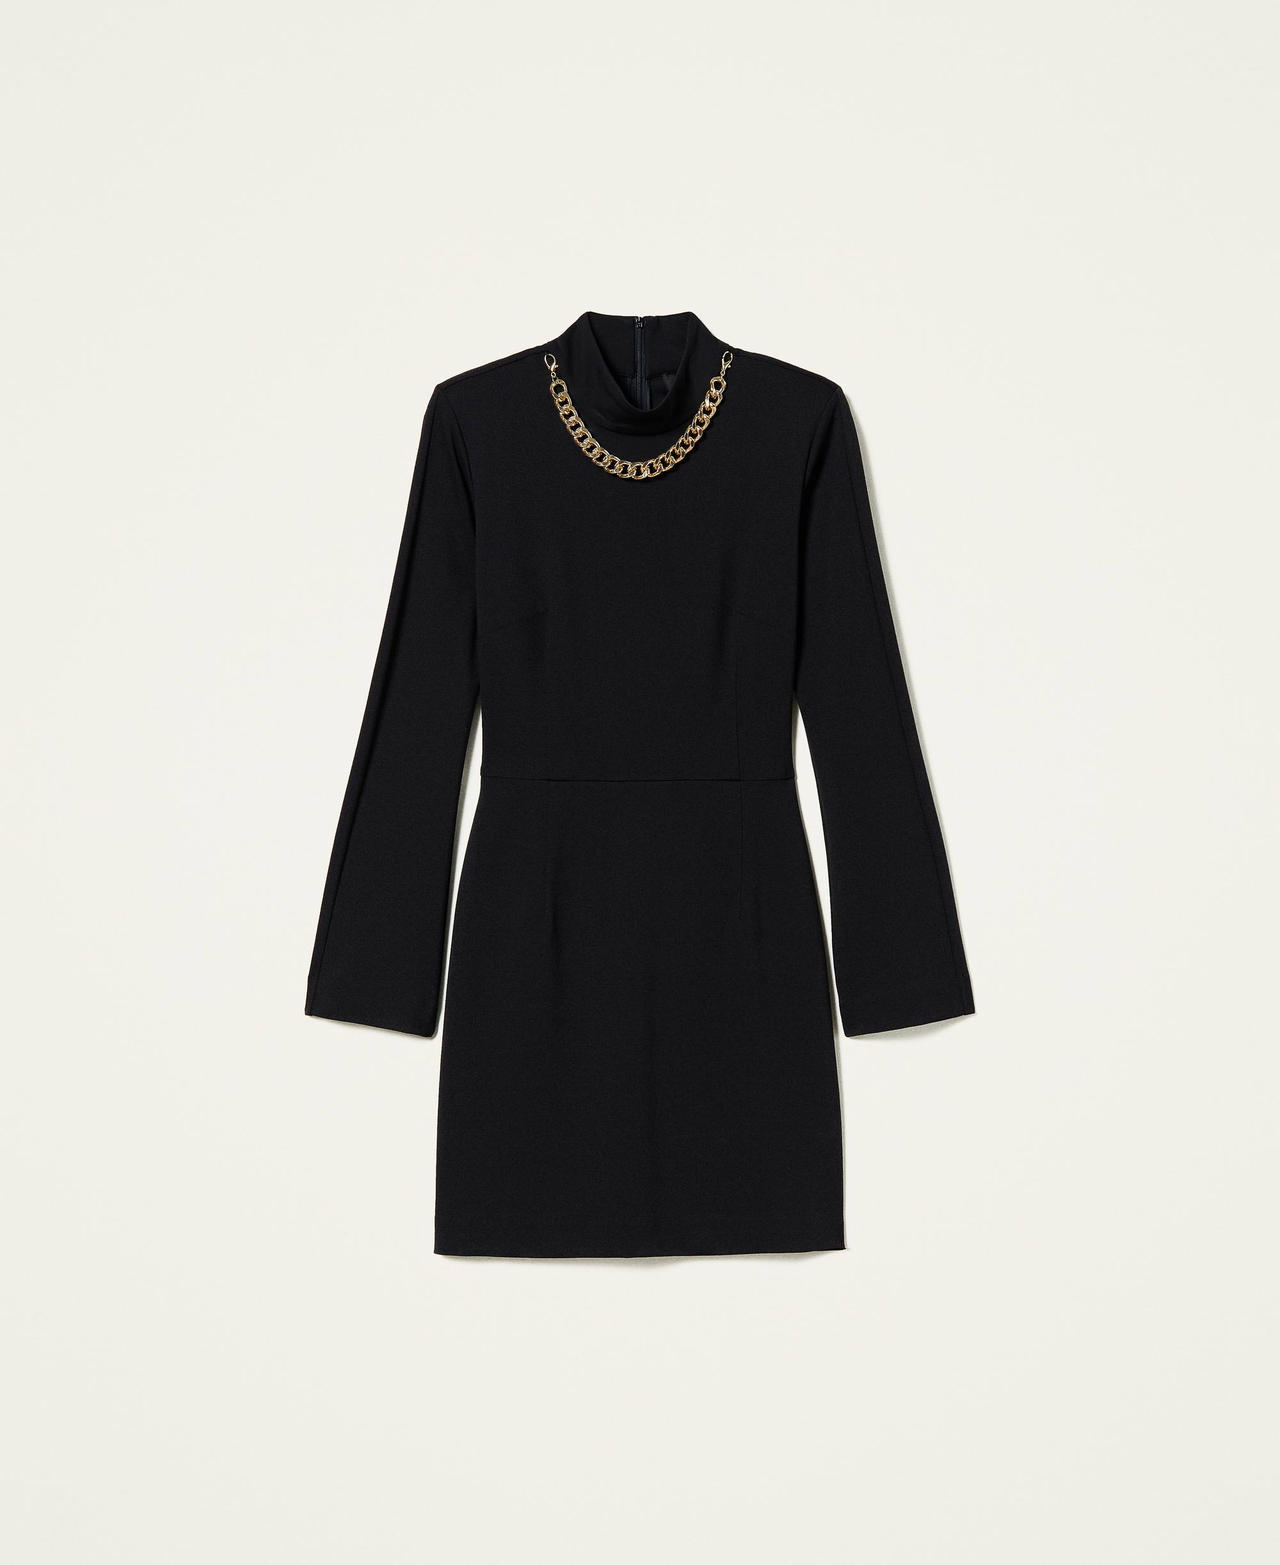 Robe ajustée « Topaz » avec chaîne Noir Femme 212AP2065-0S